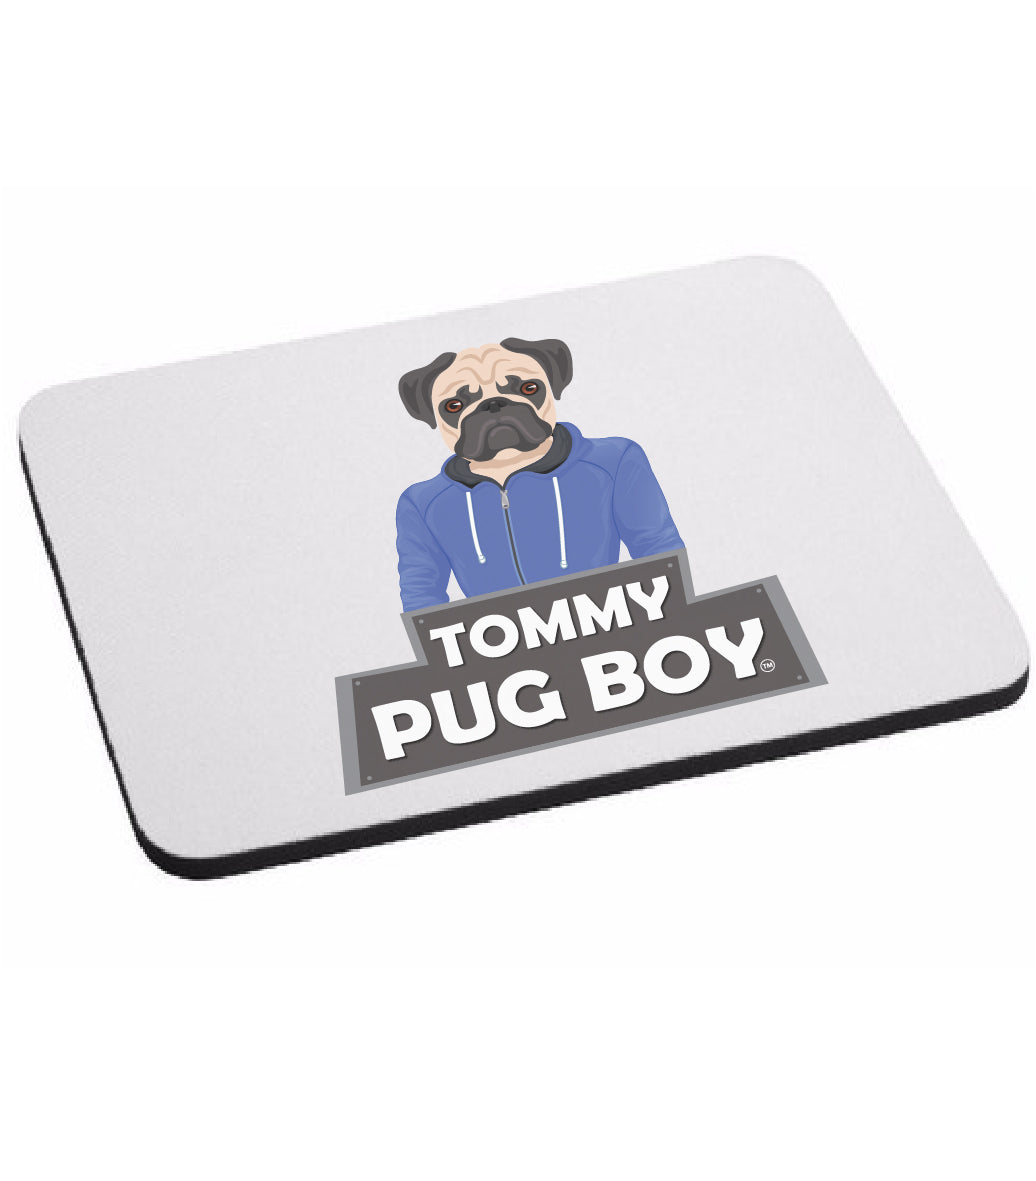 Tommy Pug Boy Mouse Mat